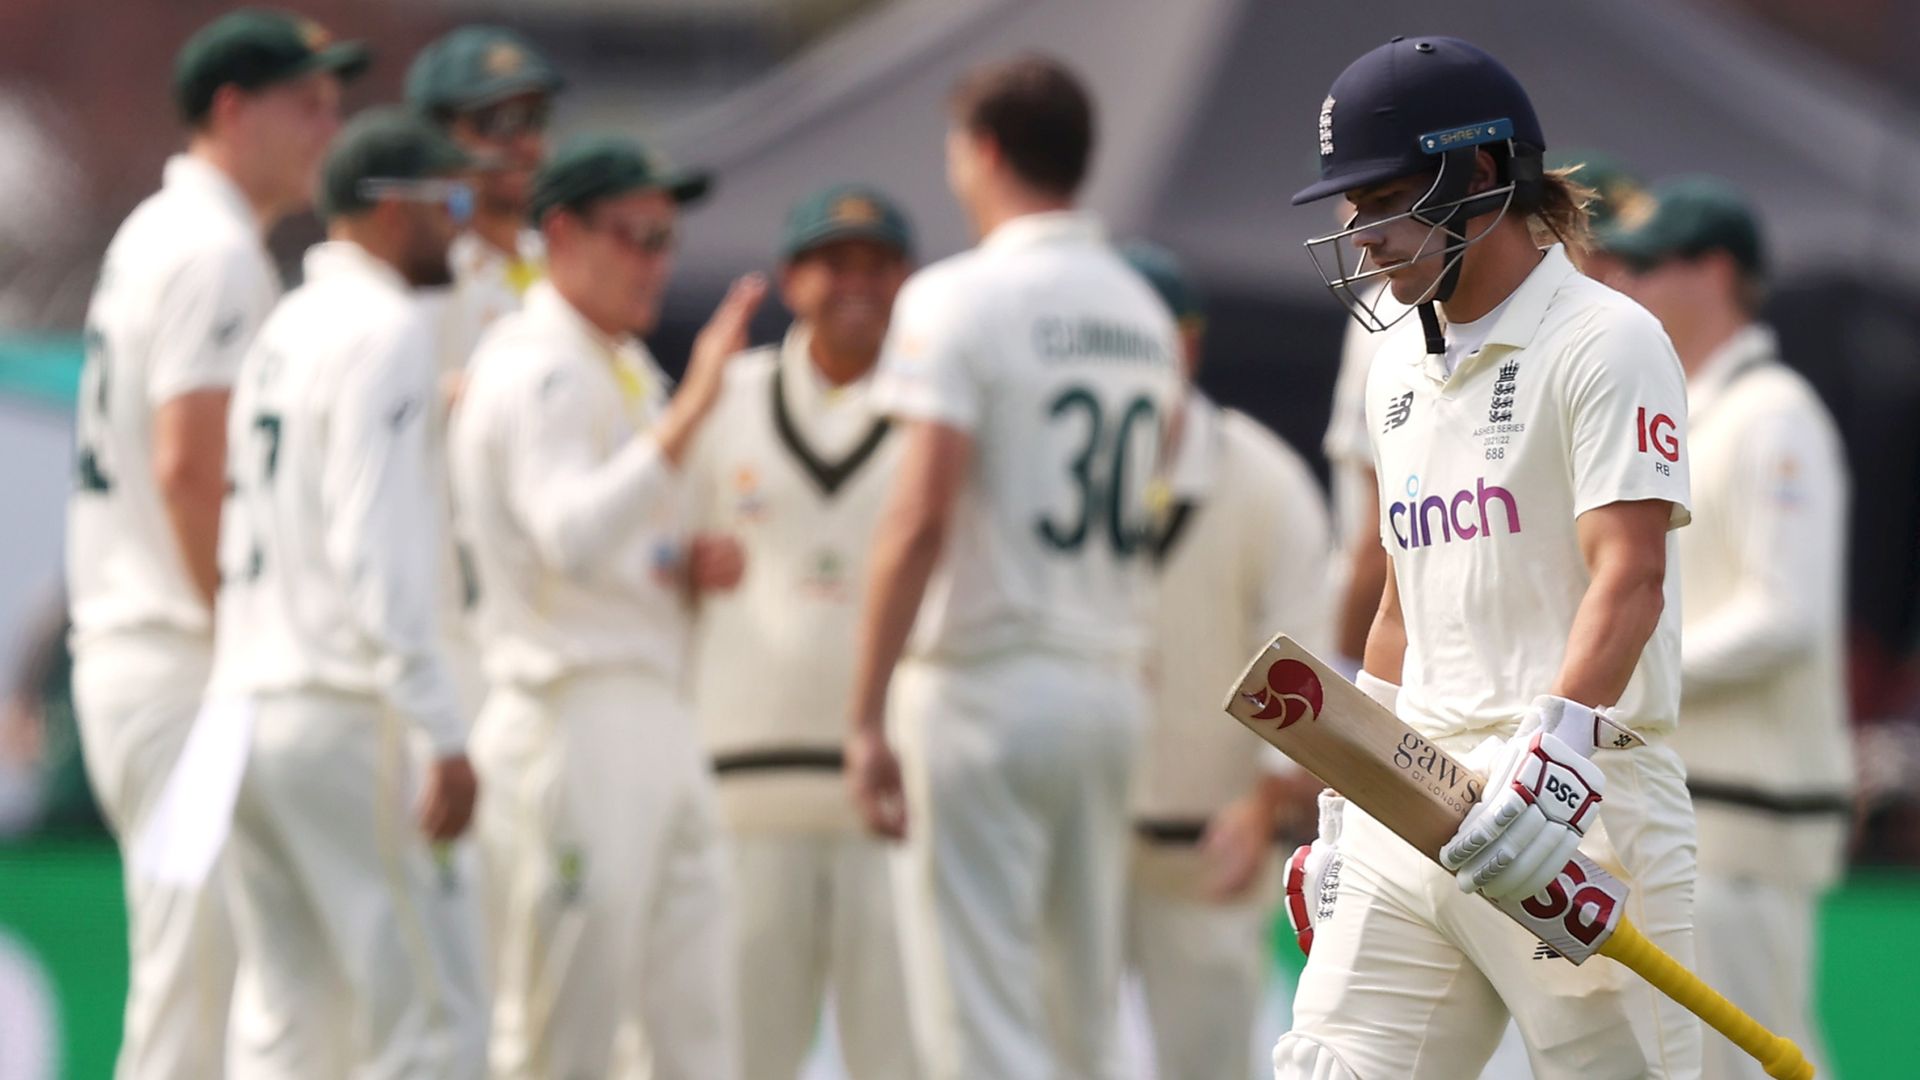 Batting slump leaves England in trouble despite late wickets